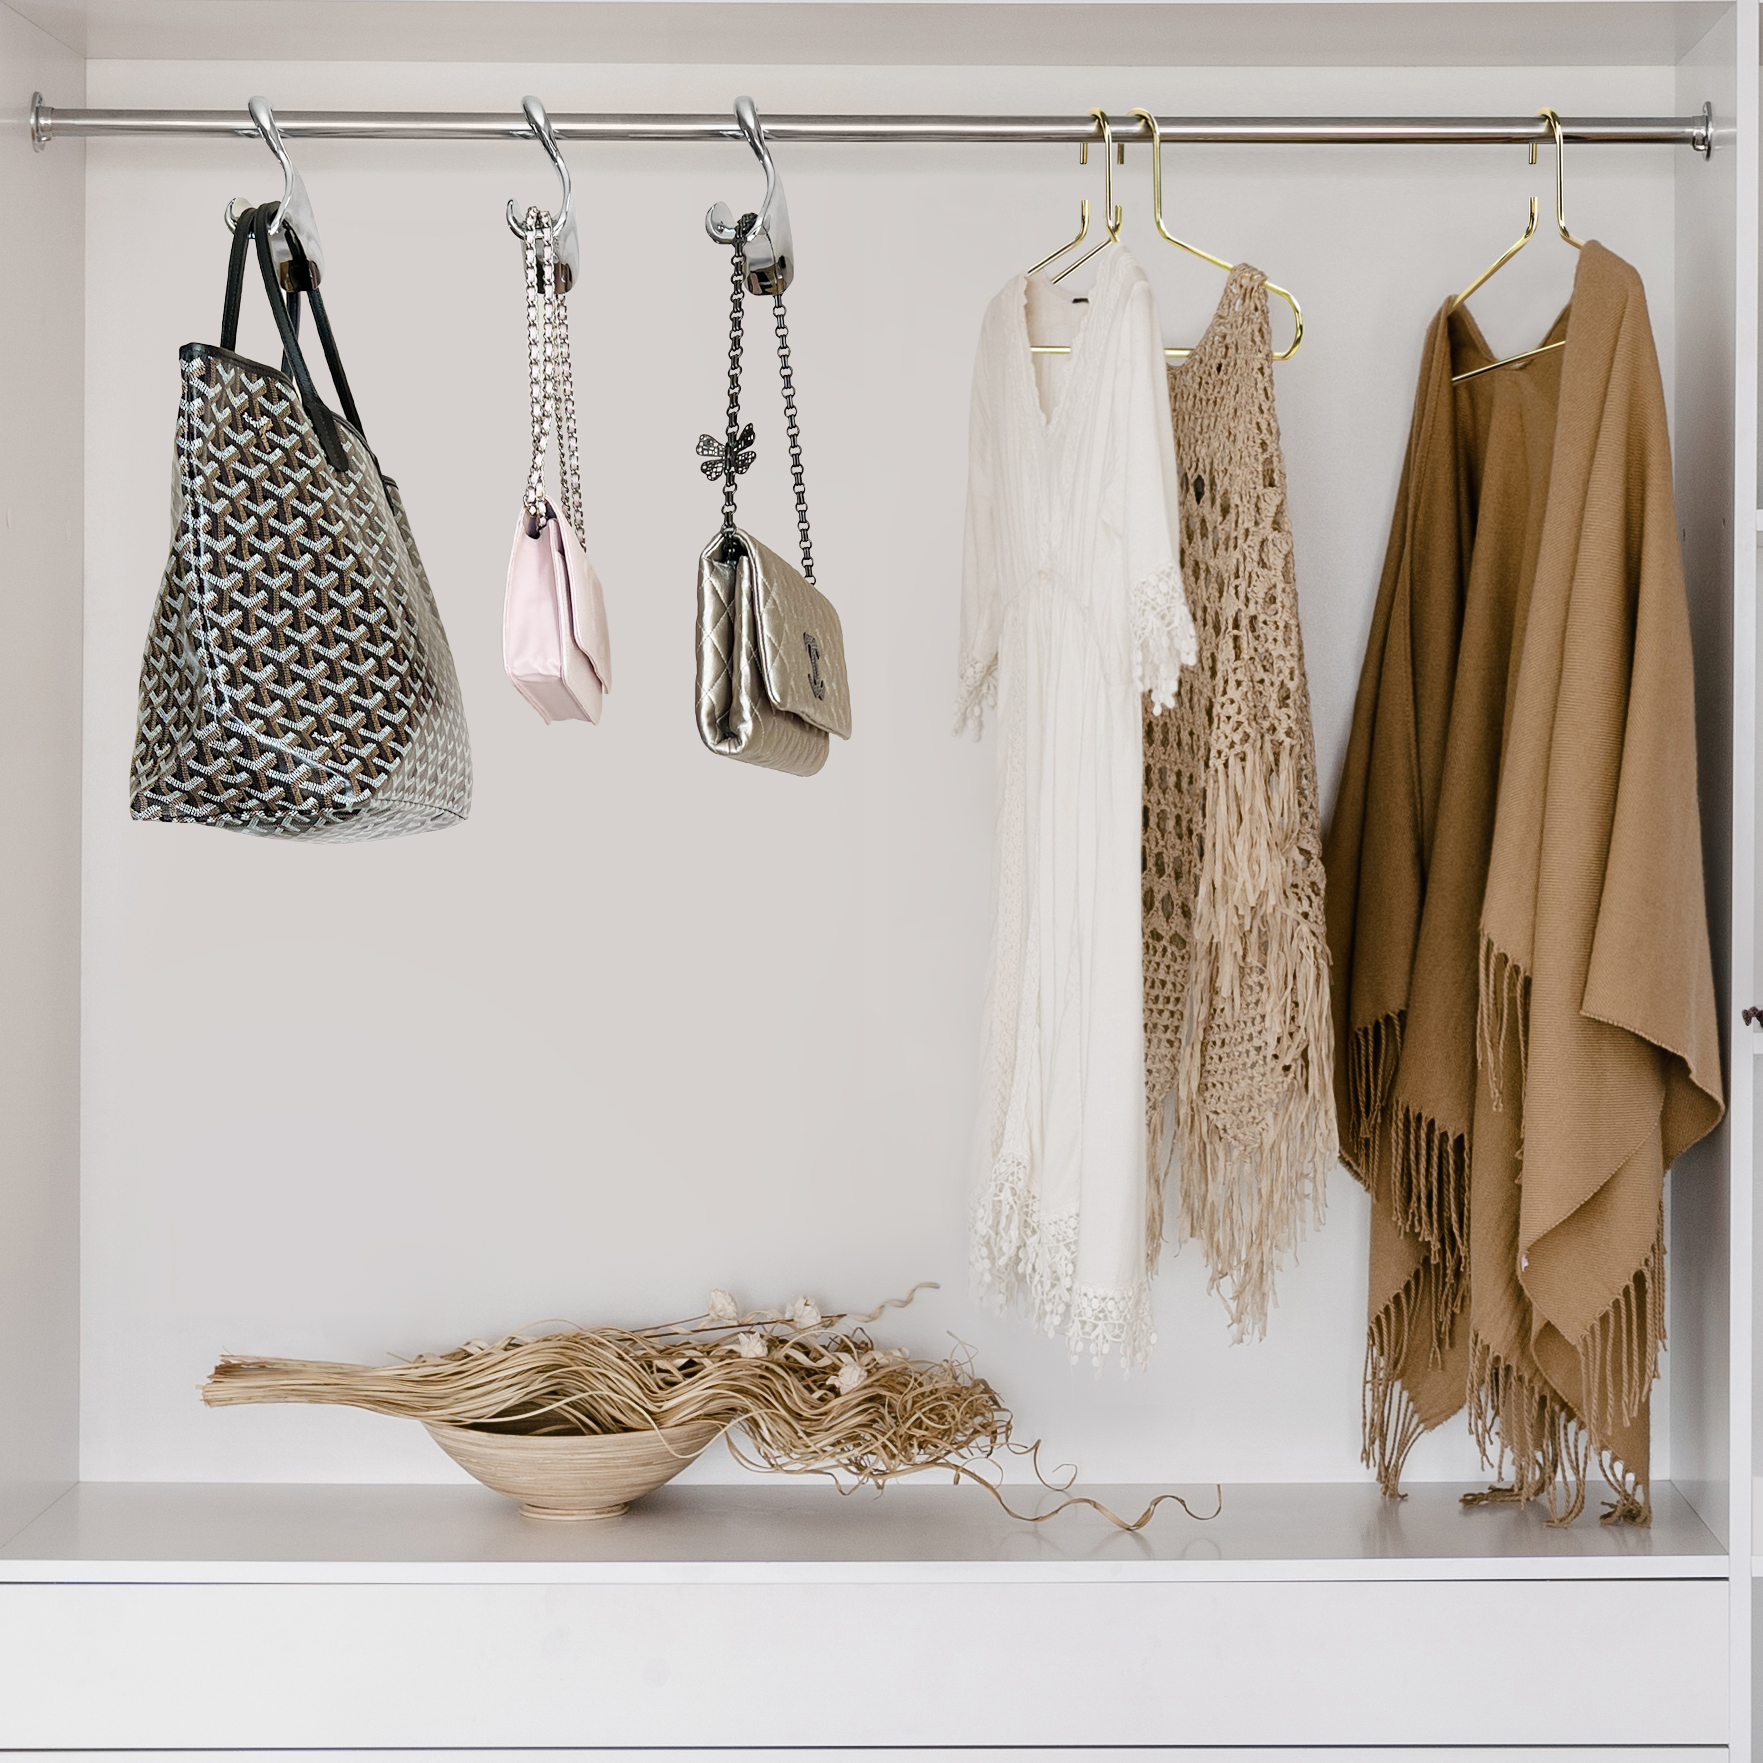 Wiosi Handbag Hanger 3 Pack - Durable Luxury Acrylic Holder Organizers Storage F